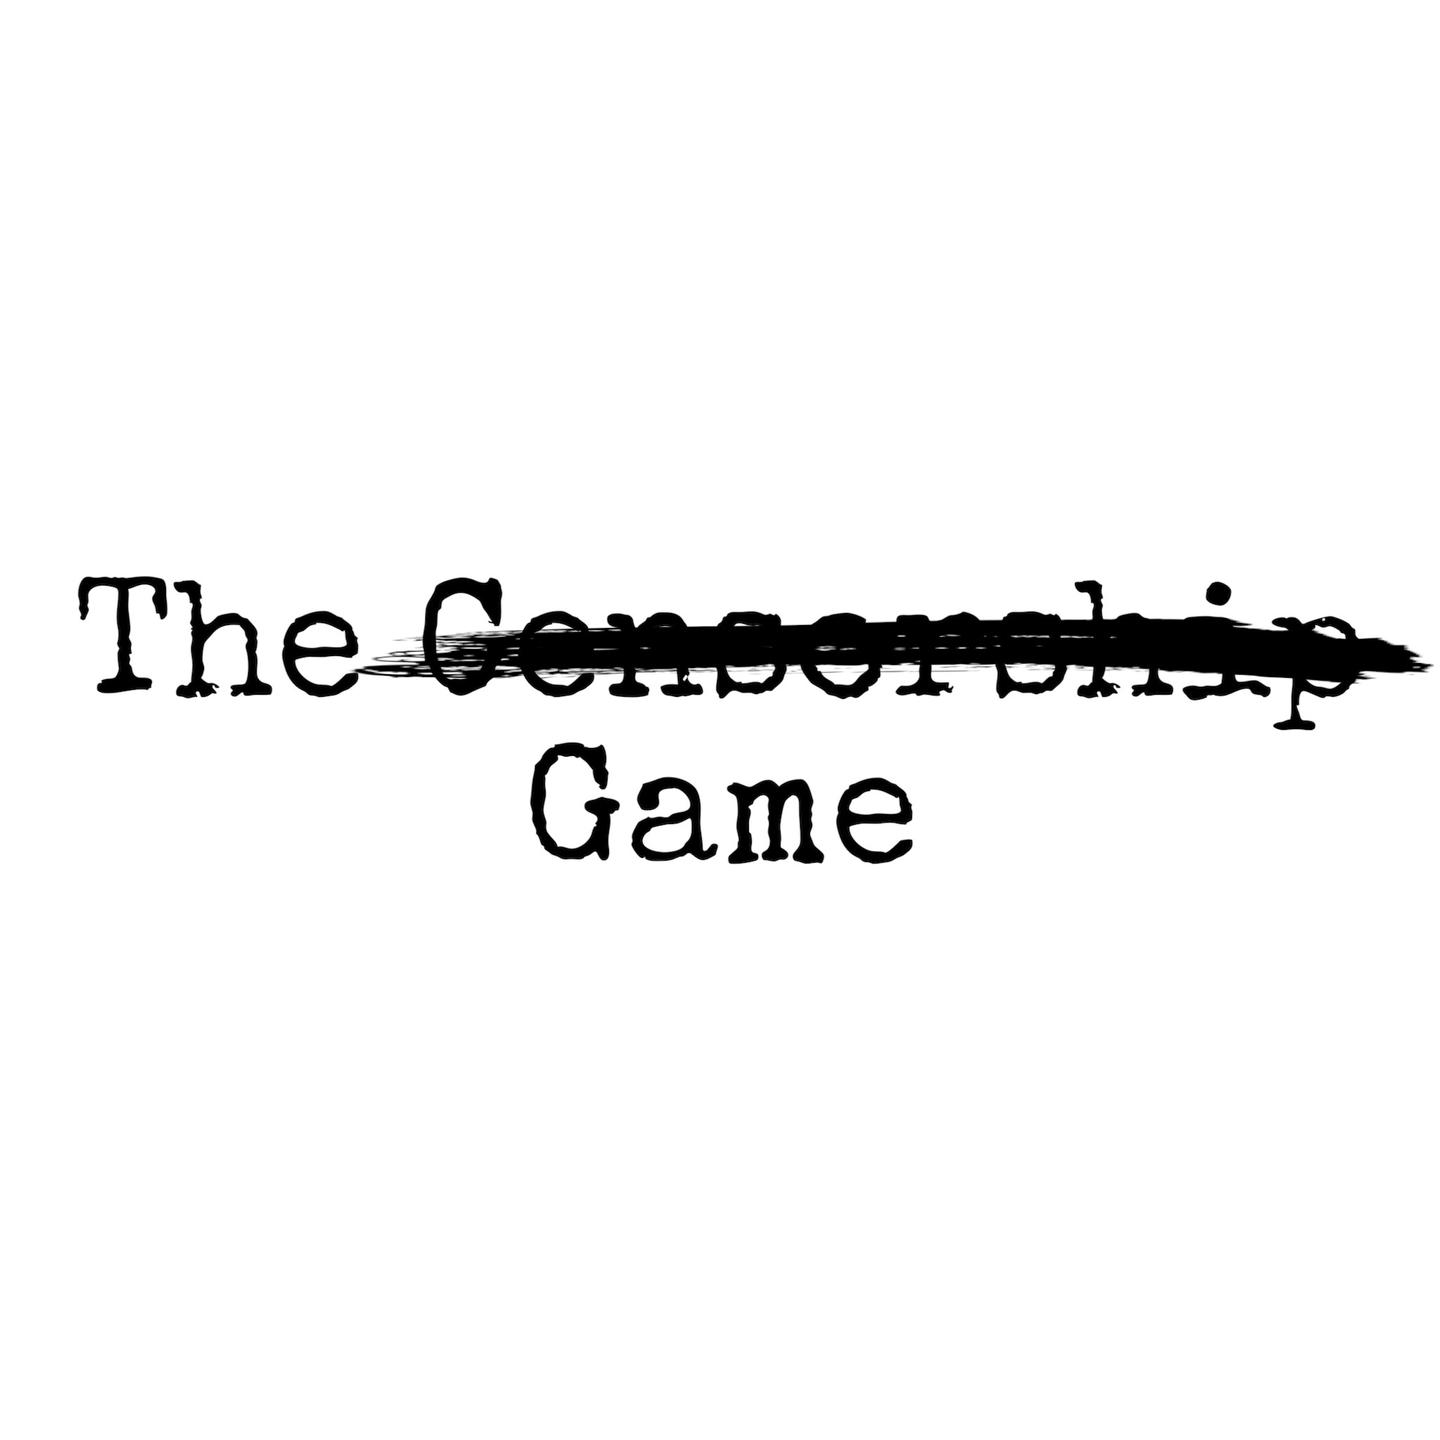 The Censorship Game